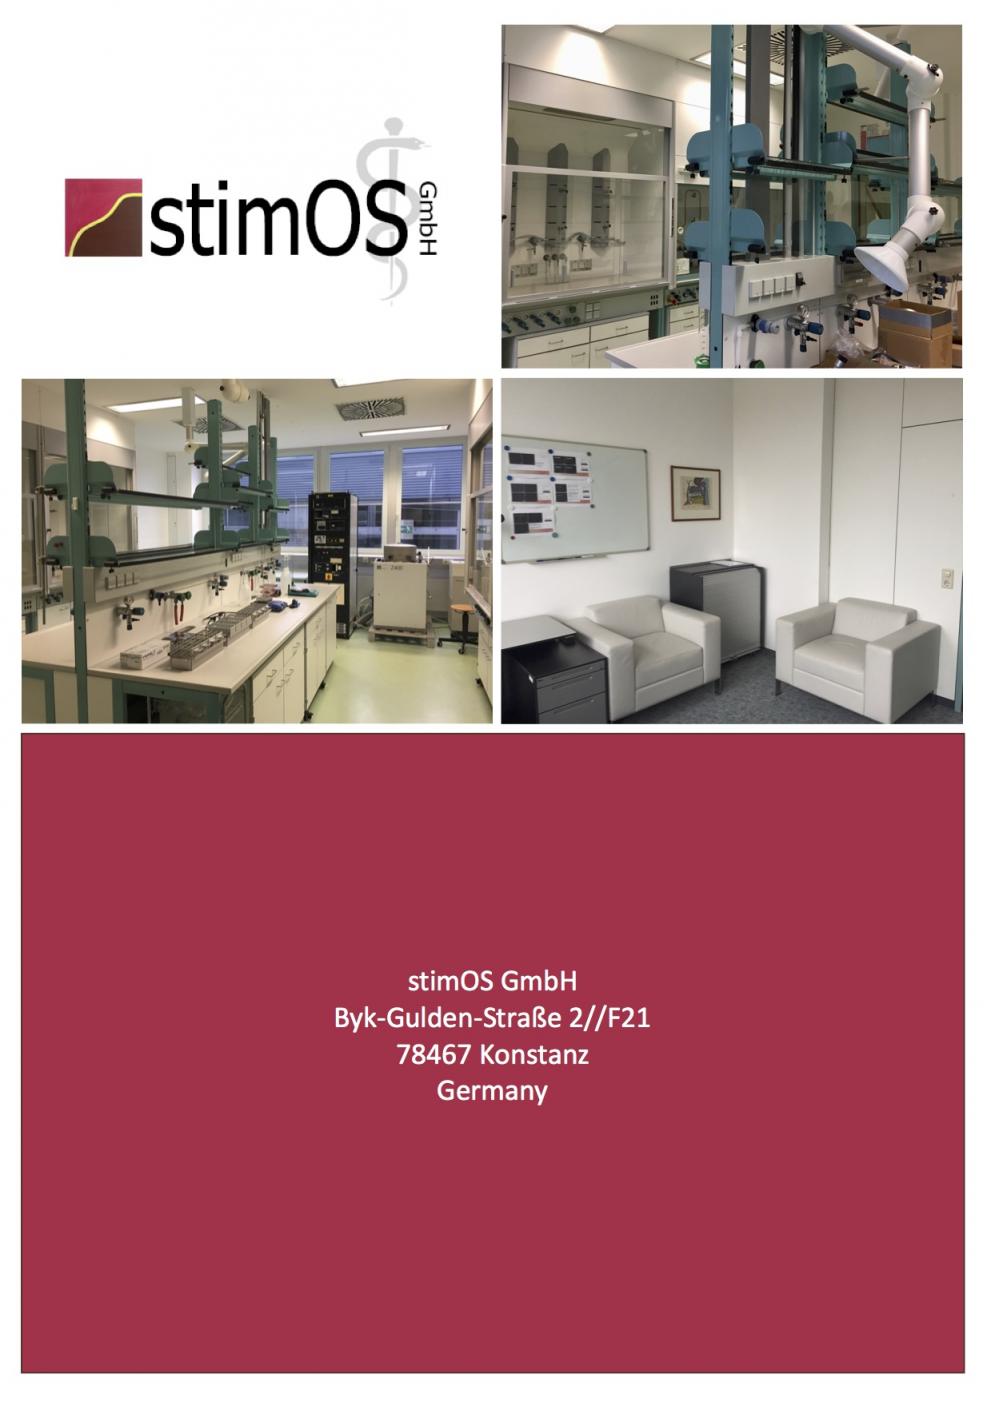 MedDEV News Medical Device Monthly News Company News stimOS GmbH